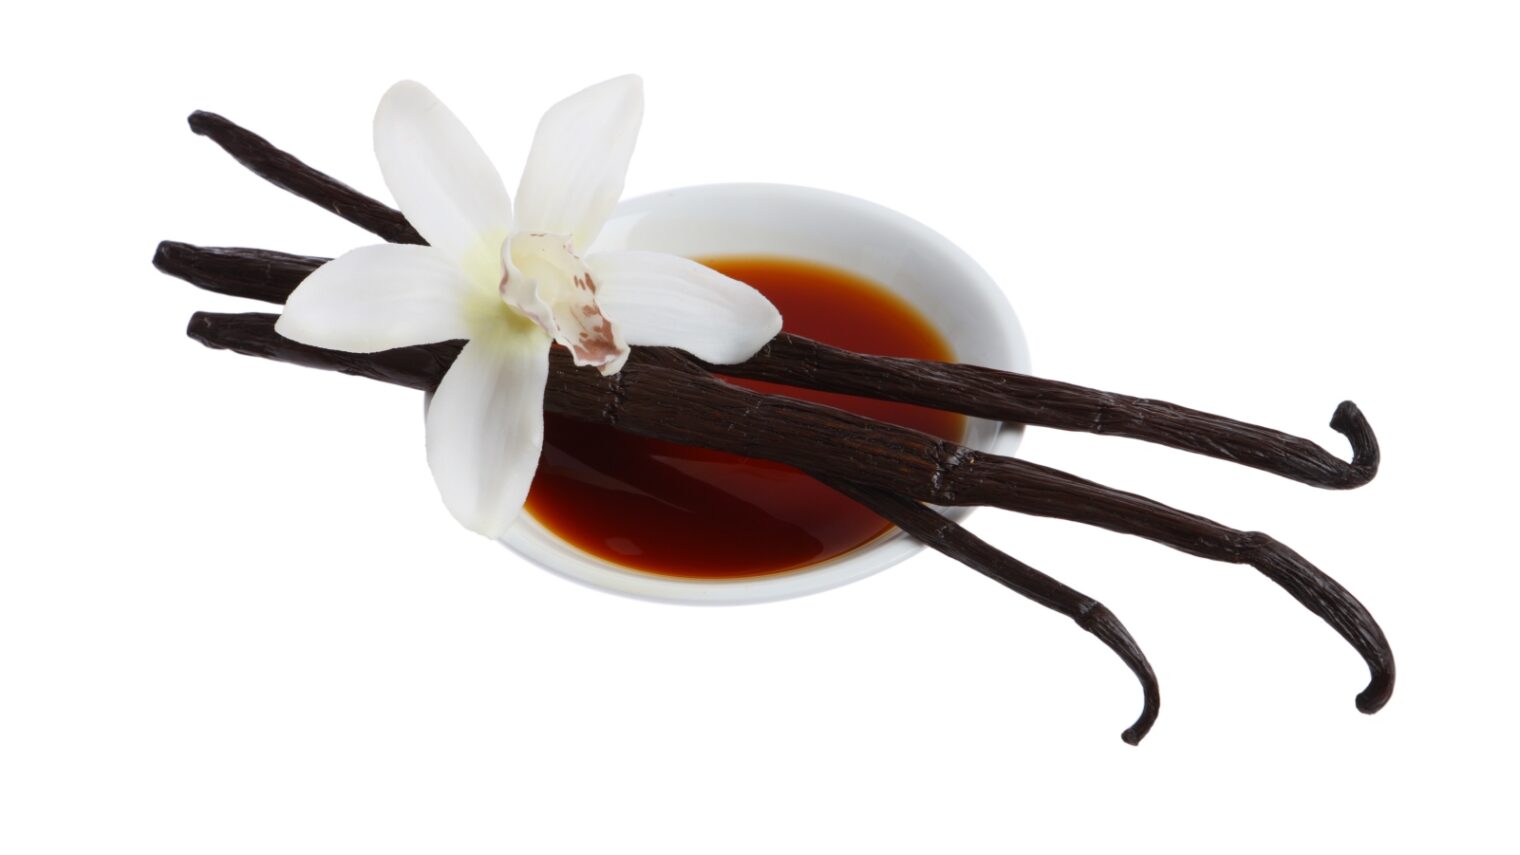 Vanilla flower, pods and extract. Photo by Hurst Photo via Shutterstock.com